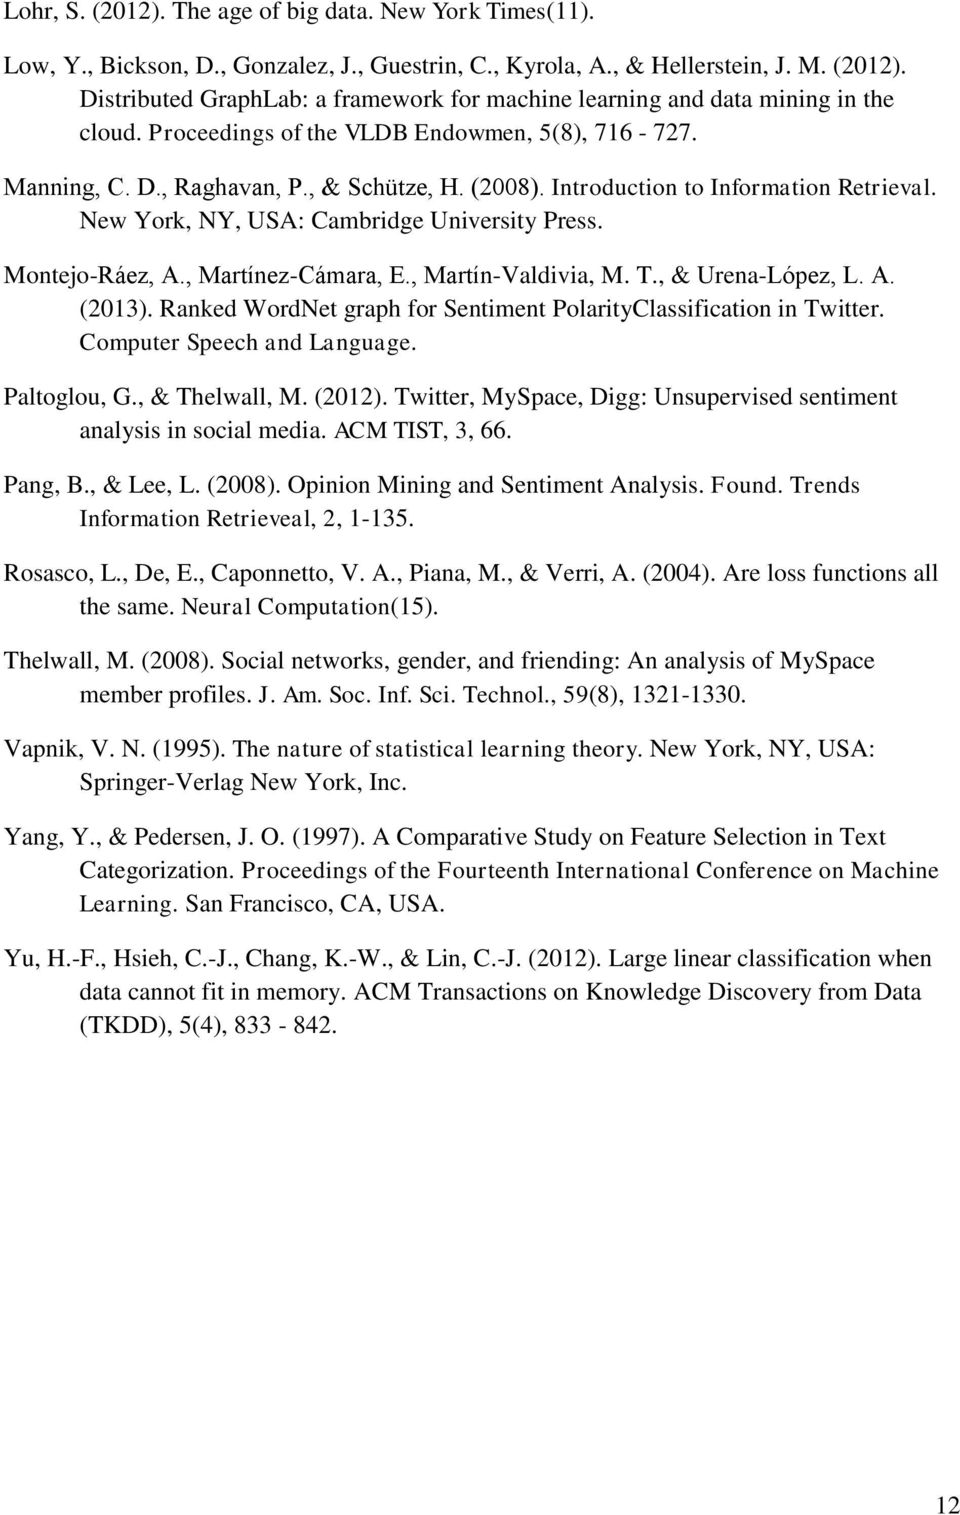 Montejo-Ráez, A., Martínez-Cámara, E., Martín-Valdivia, M. T., & Urena-López, L. A. (2013). Ranked WordNet graph for Sentiment PolarityClassification in Twitter. Computer Speech and Language.